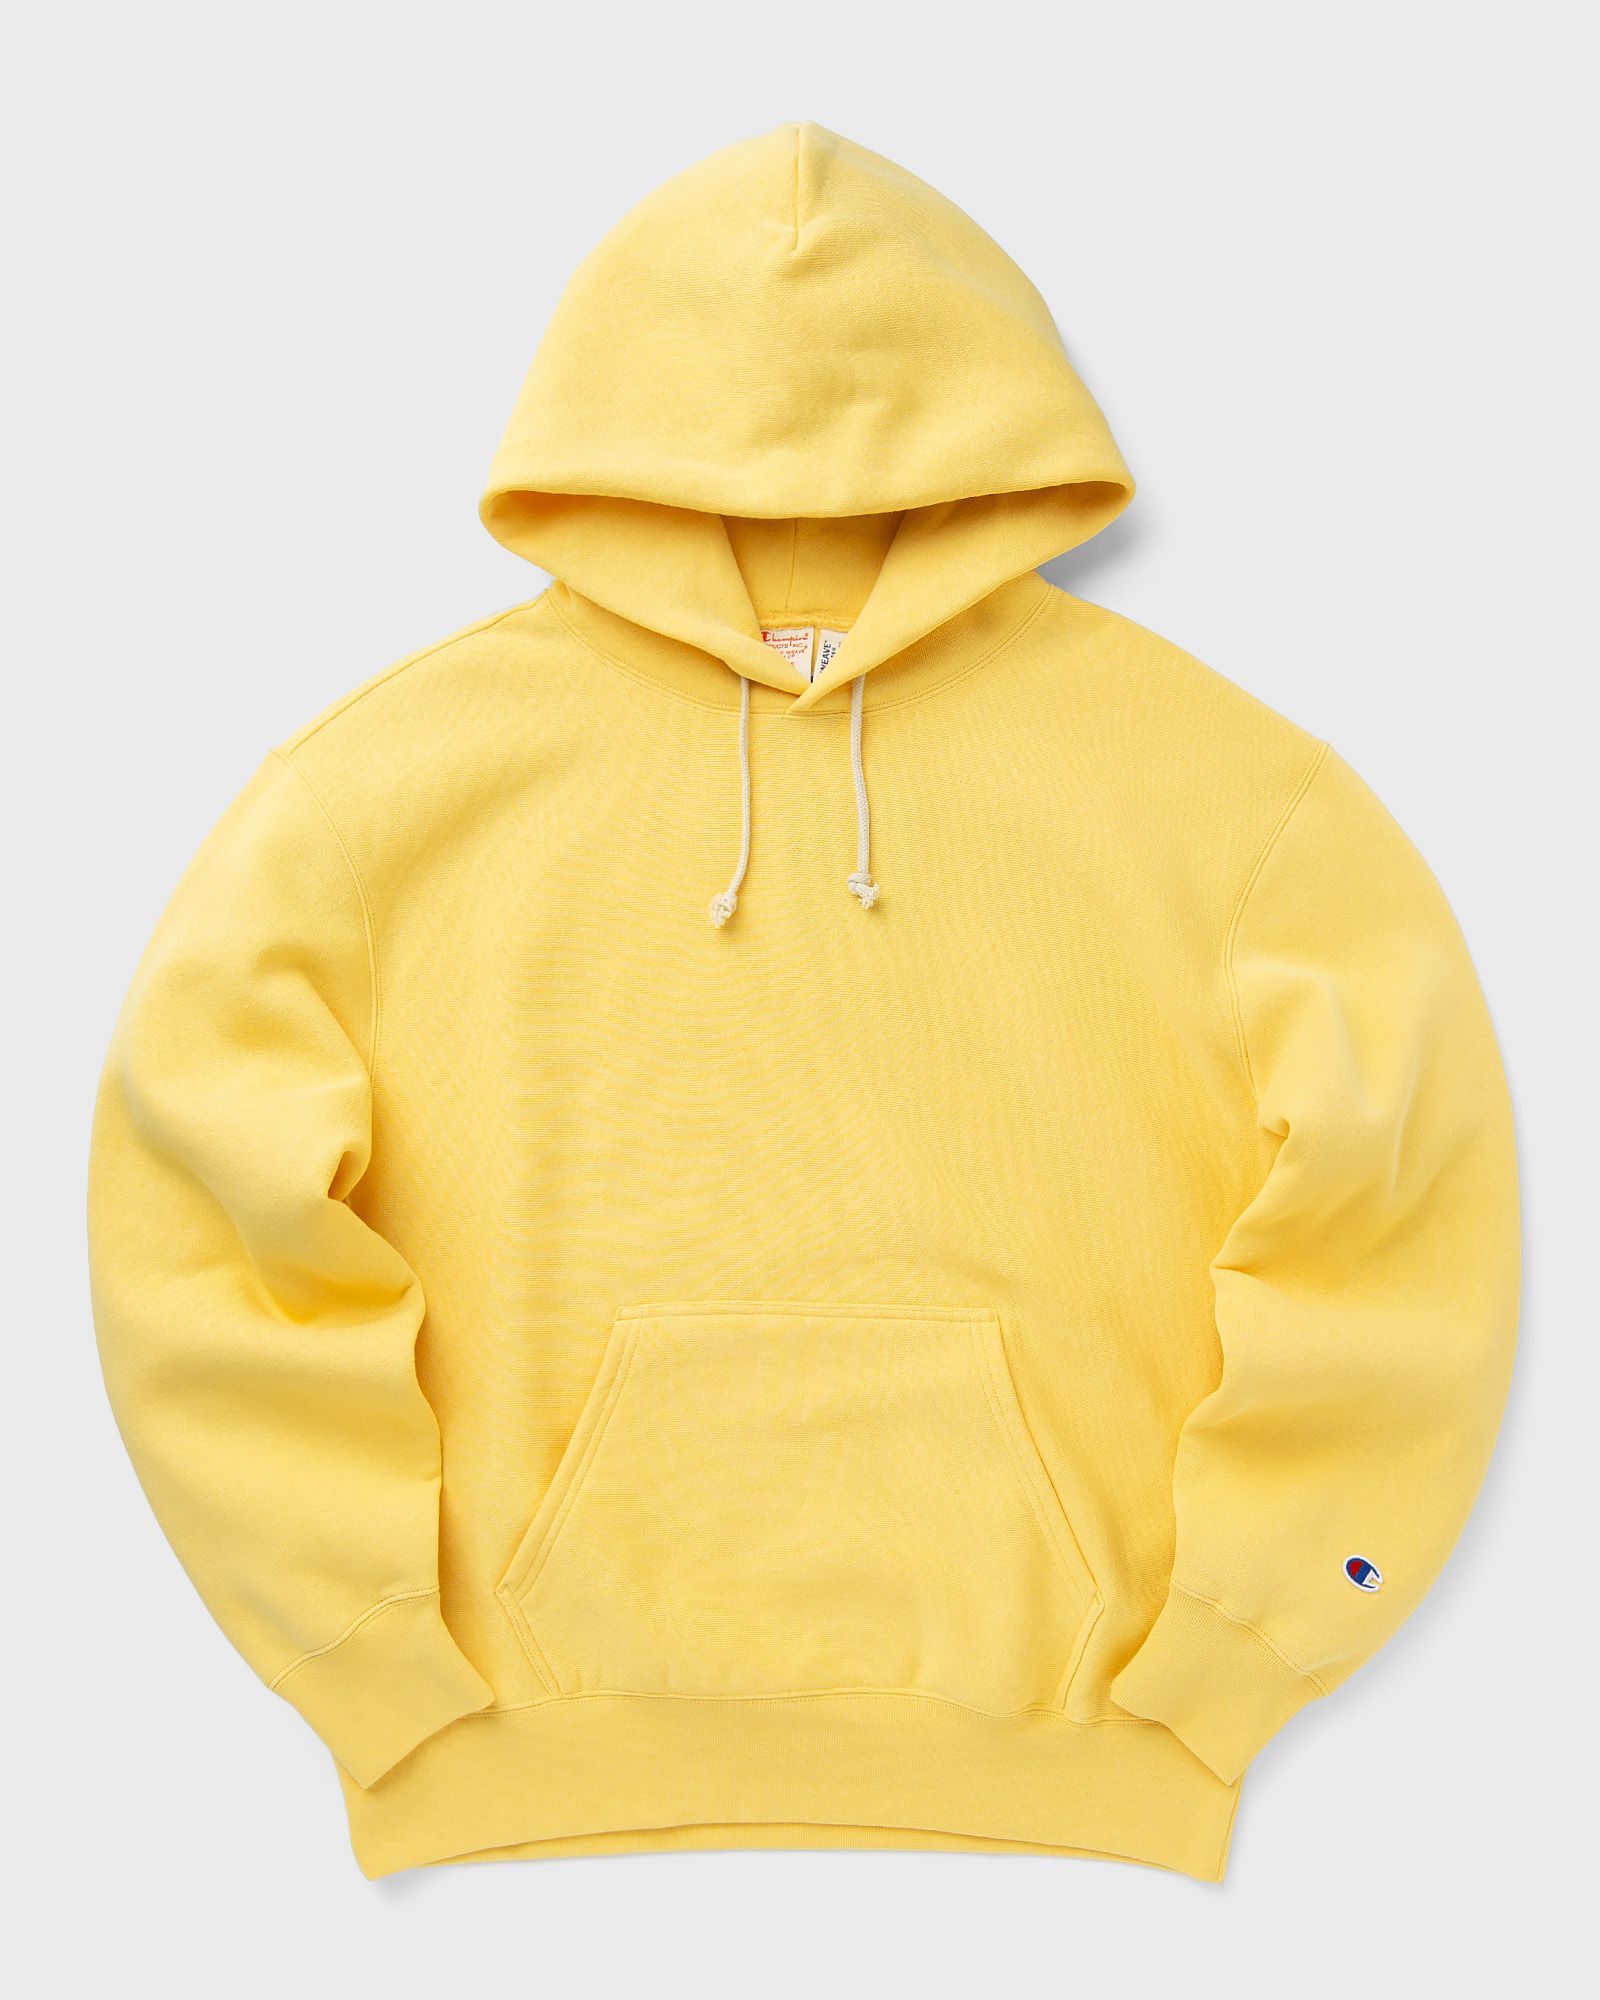 CHAMPION - hooded sweatshirt men hoodies yellow in größe:xxl